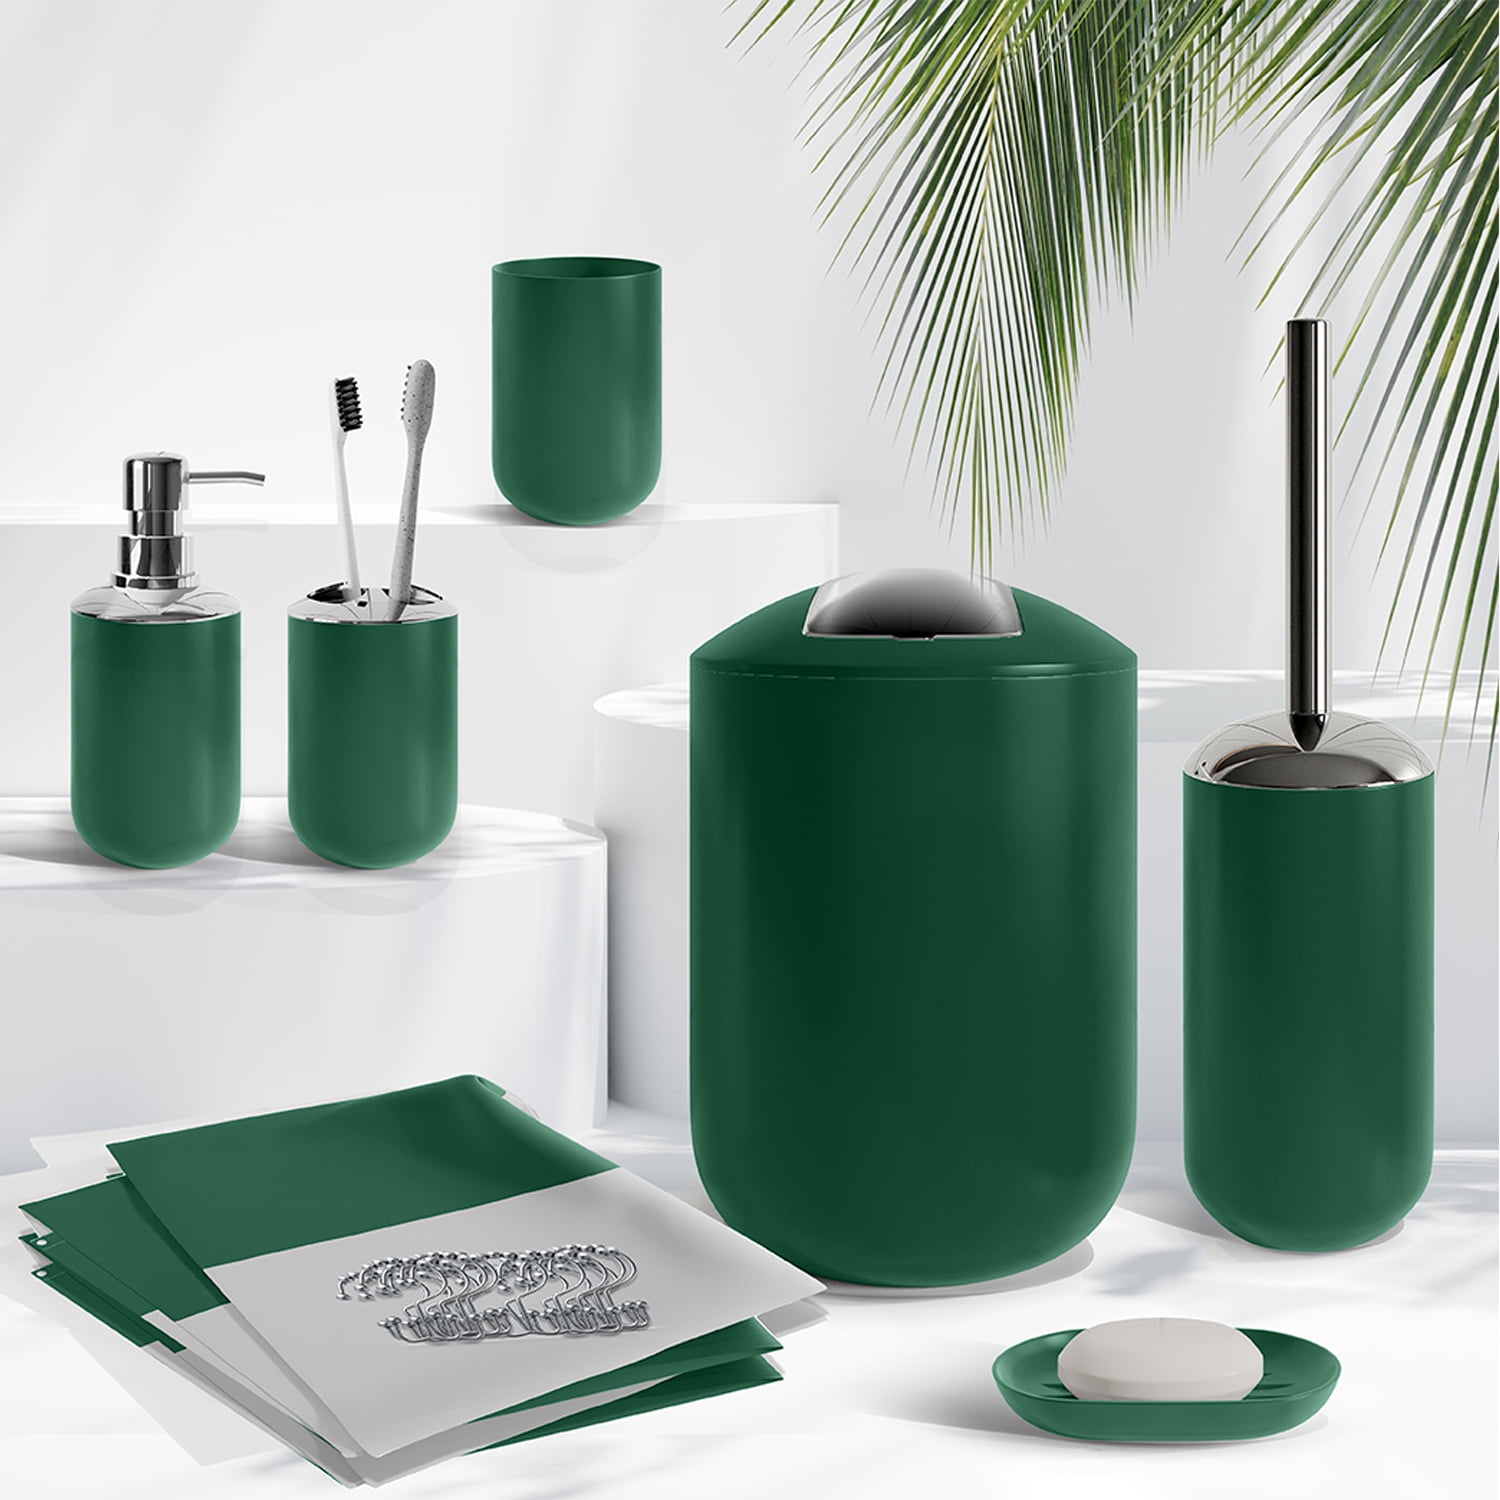 Sage green bathroom accessories - bathroom - Find A Way by JWP  Green  bathroom accessories, Green bathroom decor, Bathroom accessories design